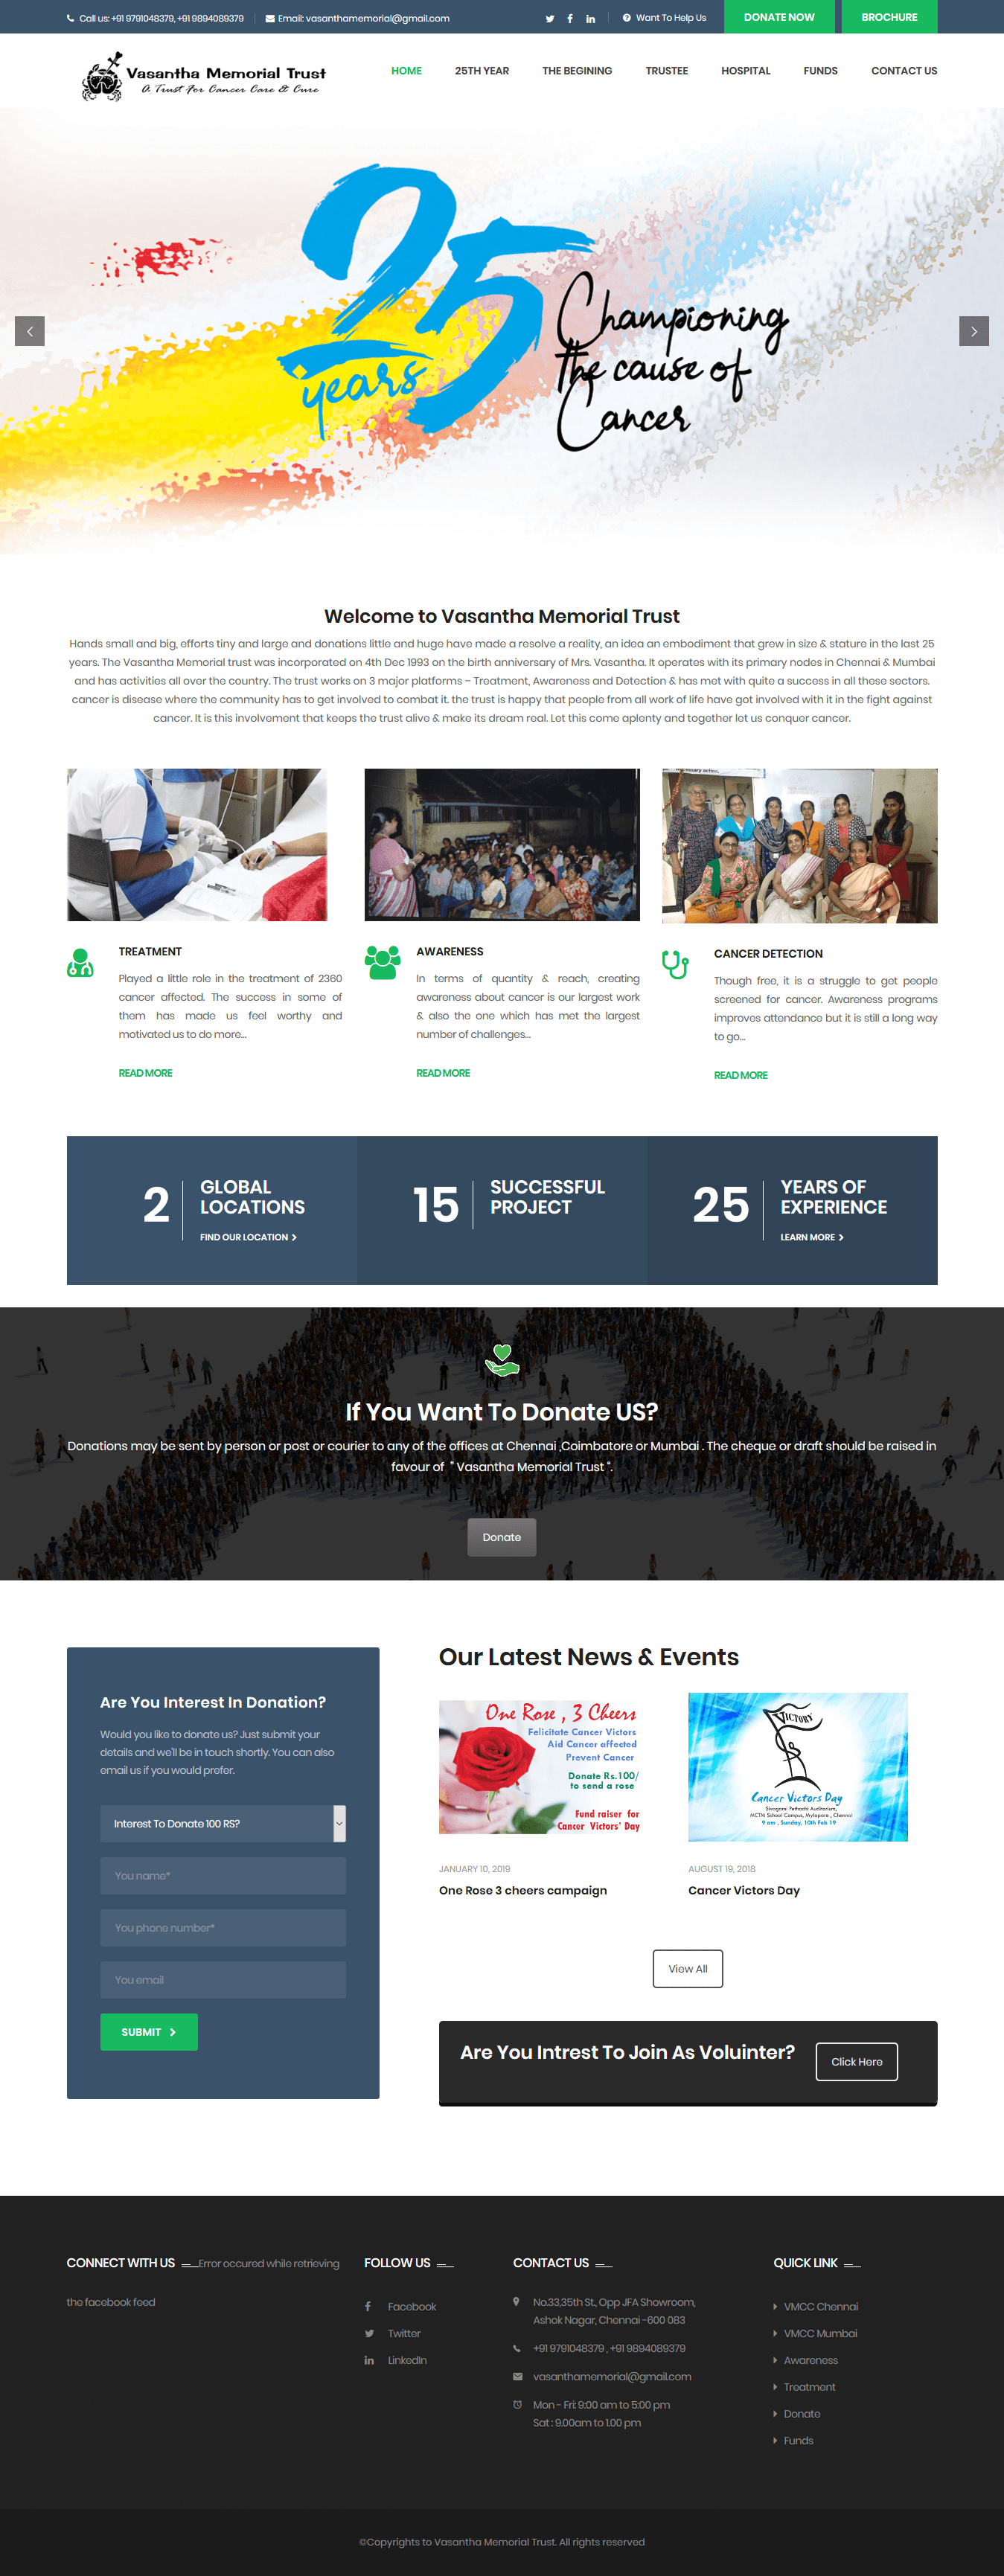 cms-website